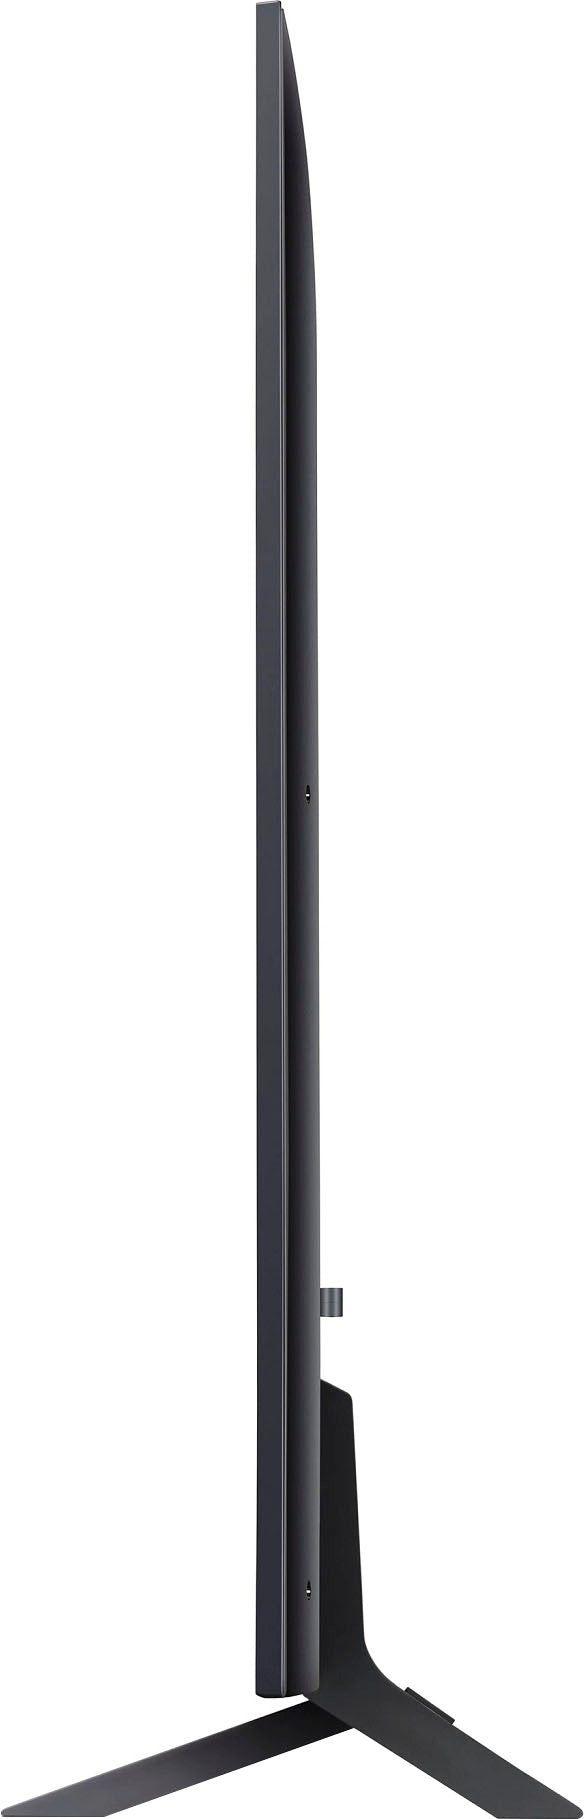 LG - 75” Class UR9000 Series LED 4K UHD Smart webOS TV_10